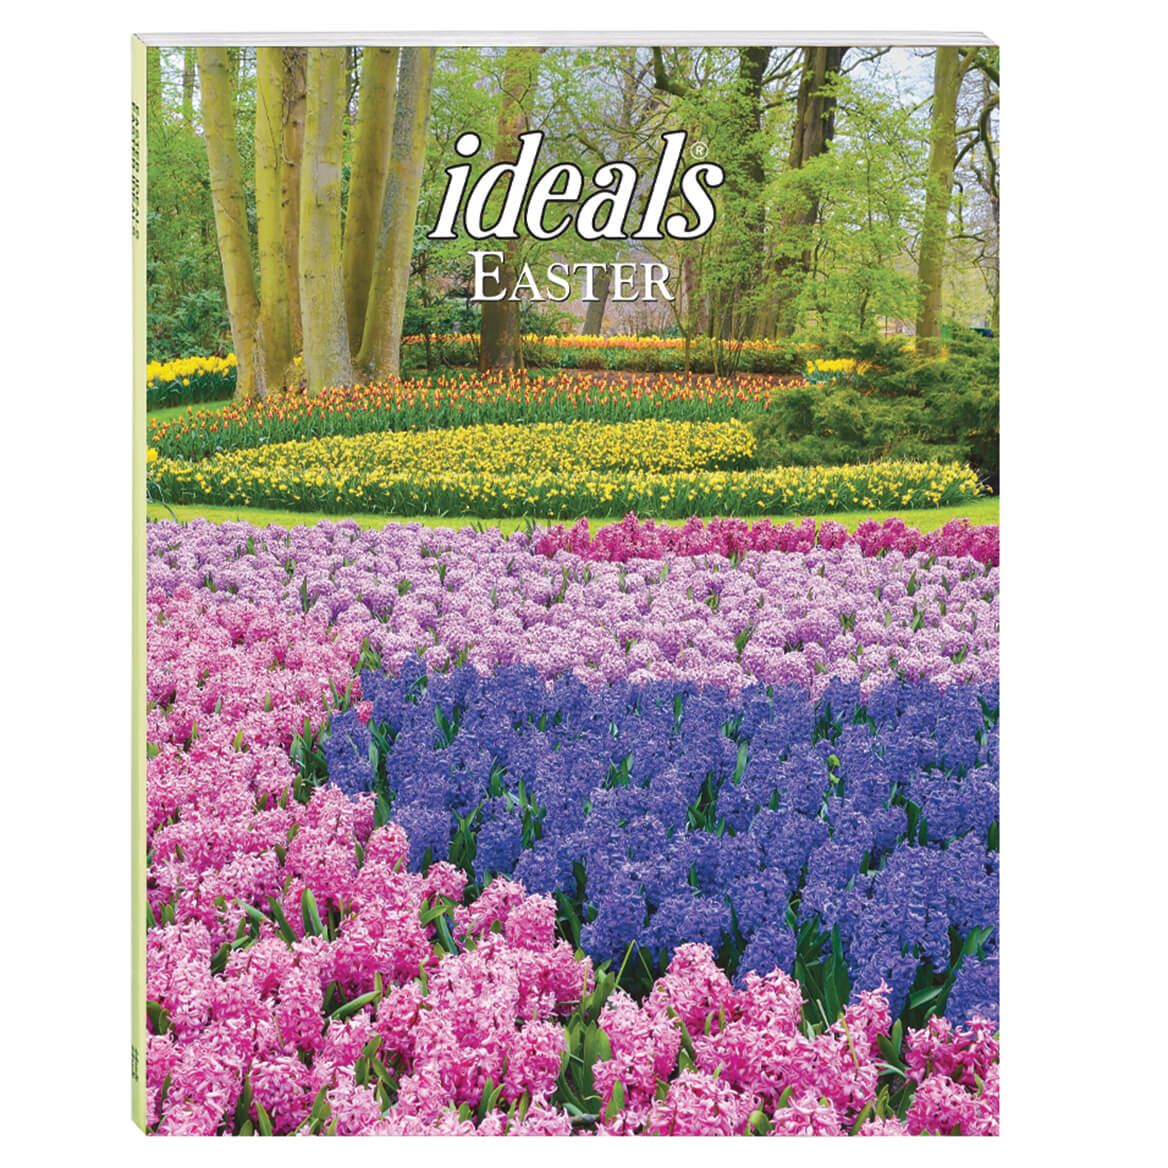 Easter Ideals Book + '-' + 328667